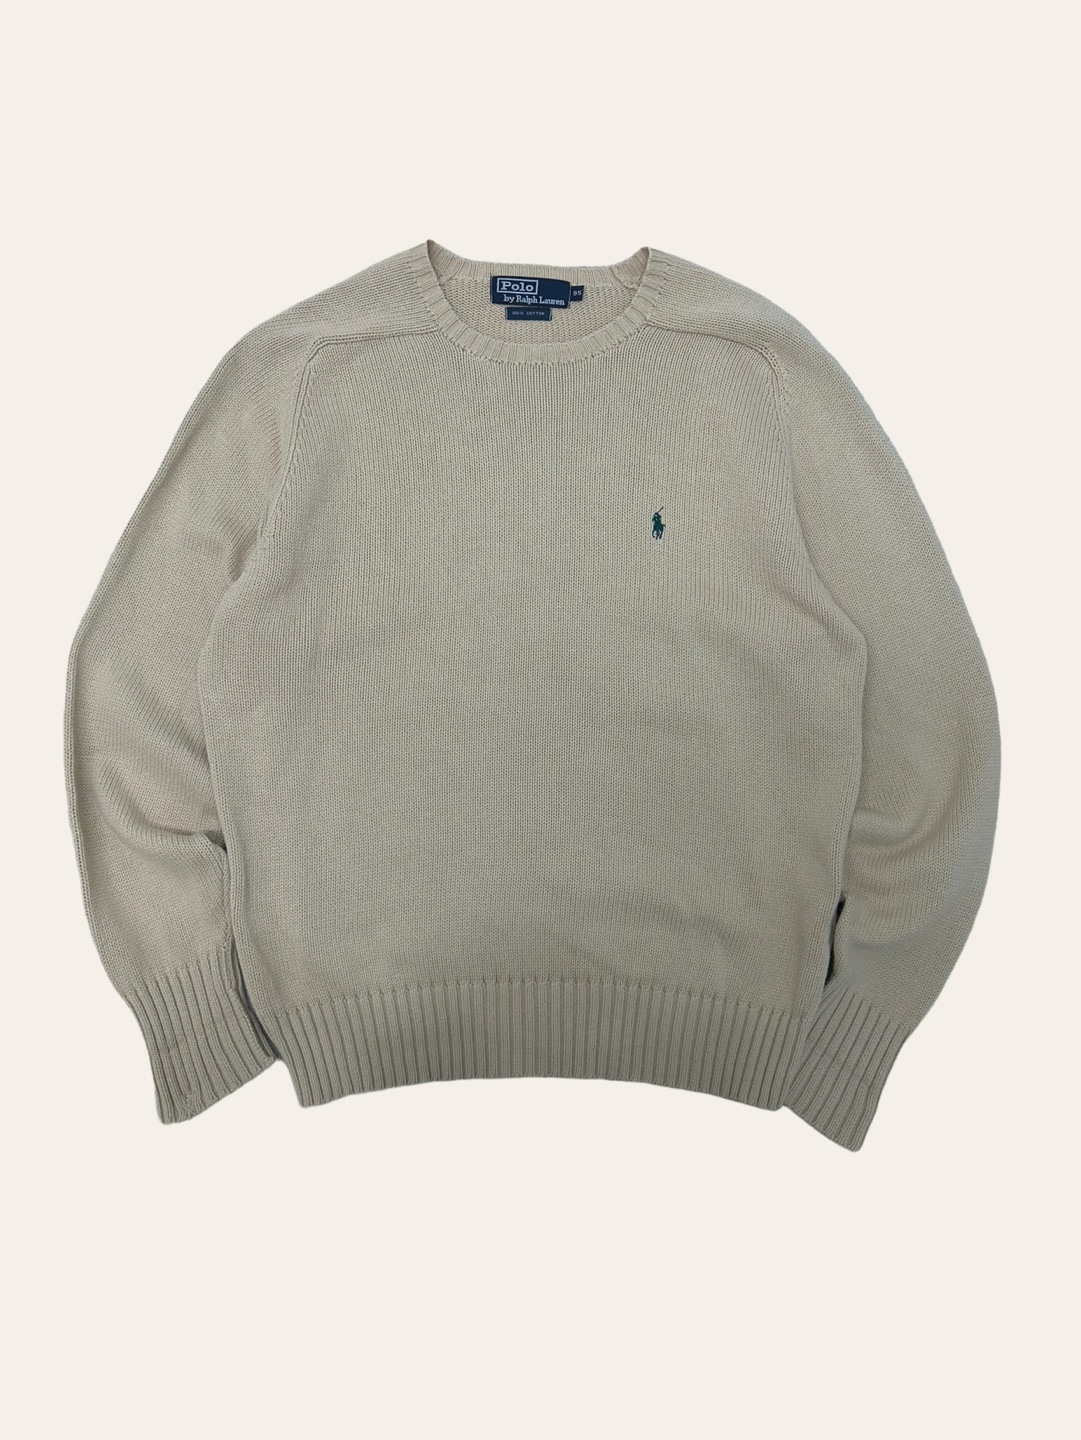 Polo ralph lauren beige cotton crewneck sweater 95